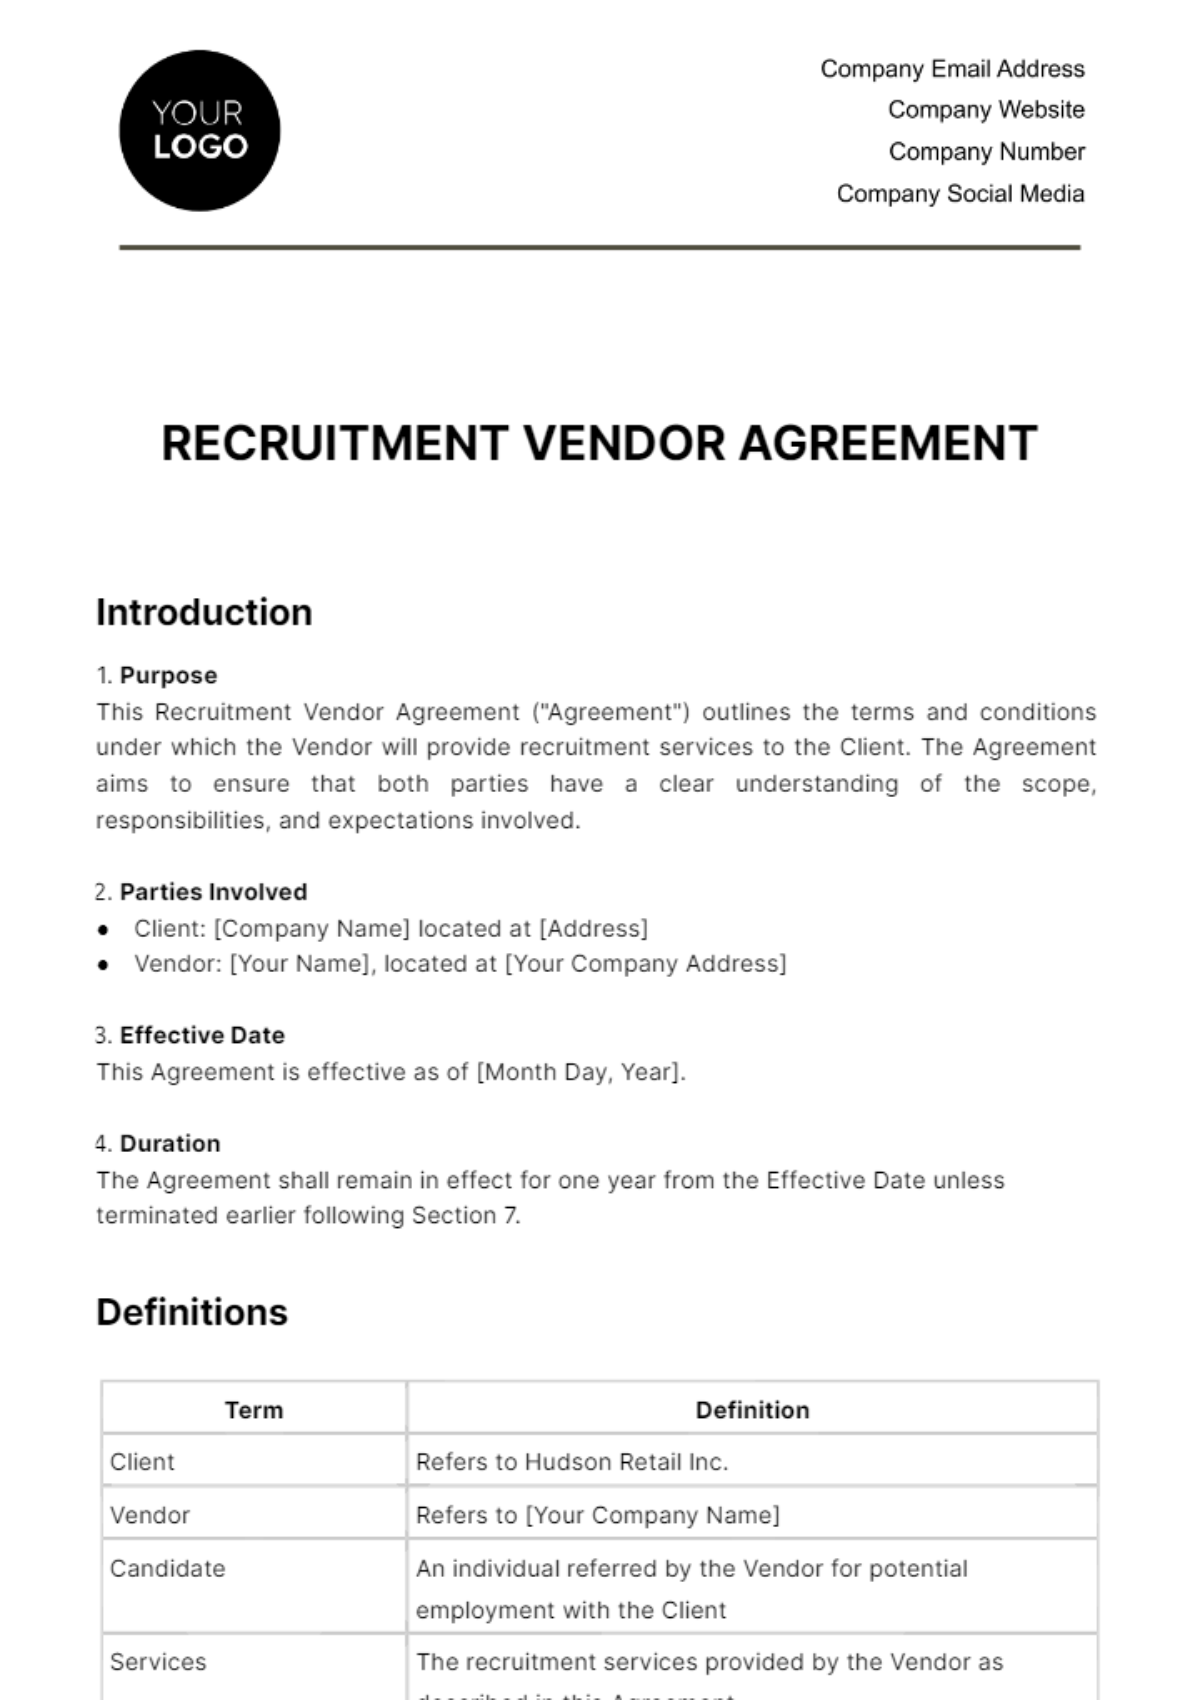 Free Recruitment Vendor Agreement HR Template